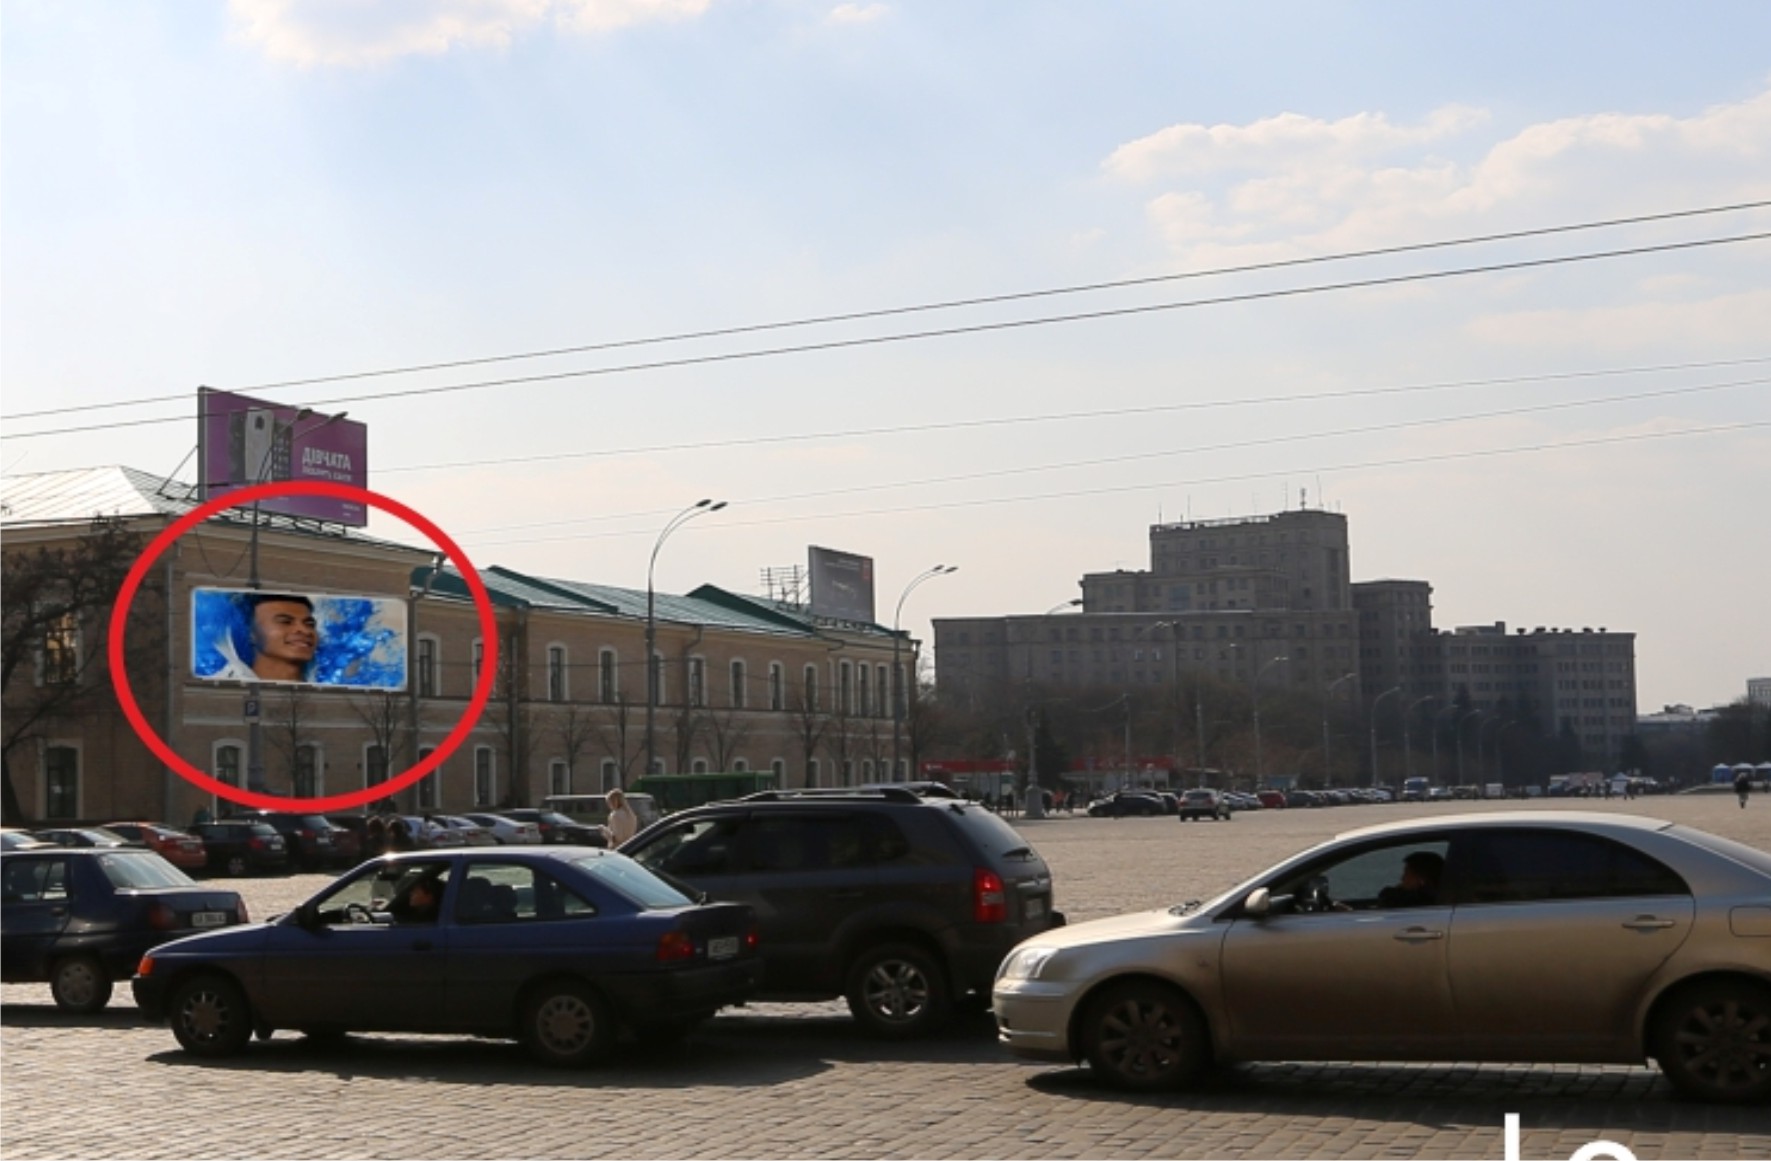 Реклама на светодиодном экране в центре города